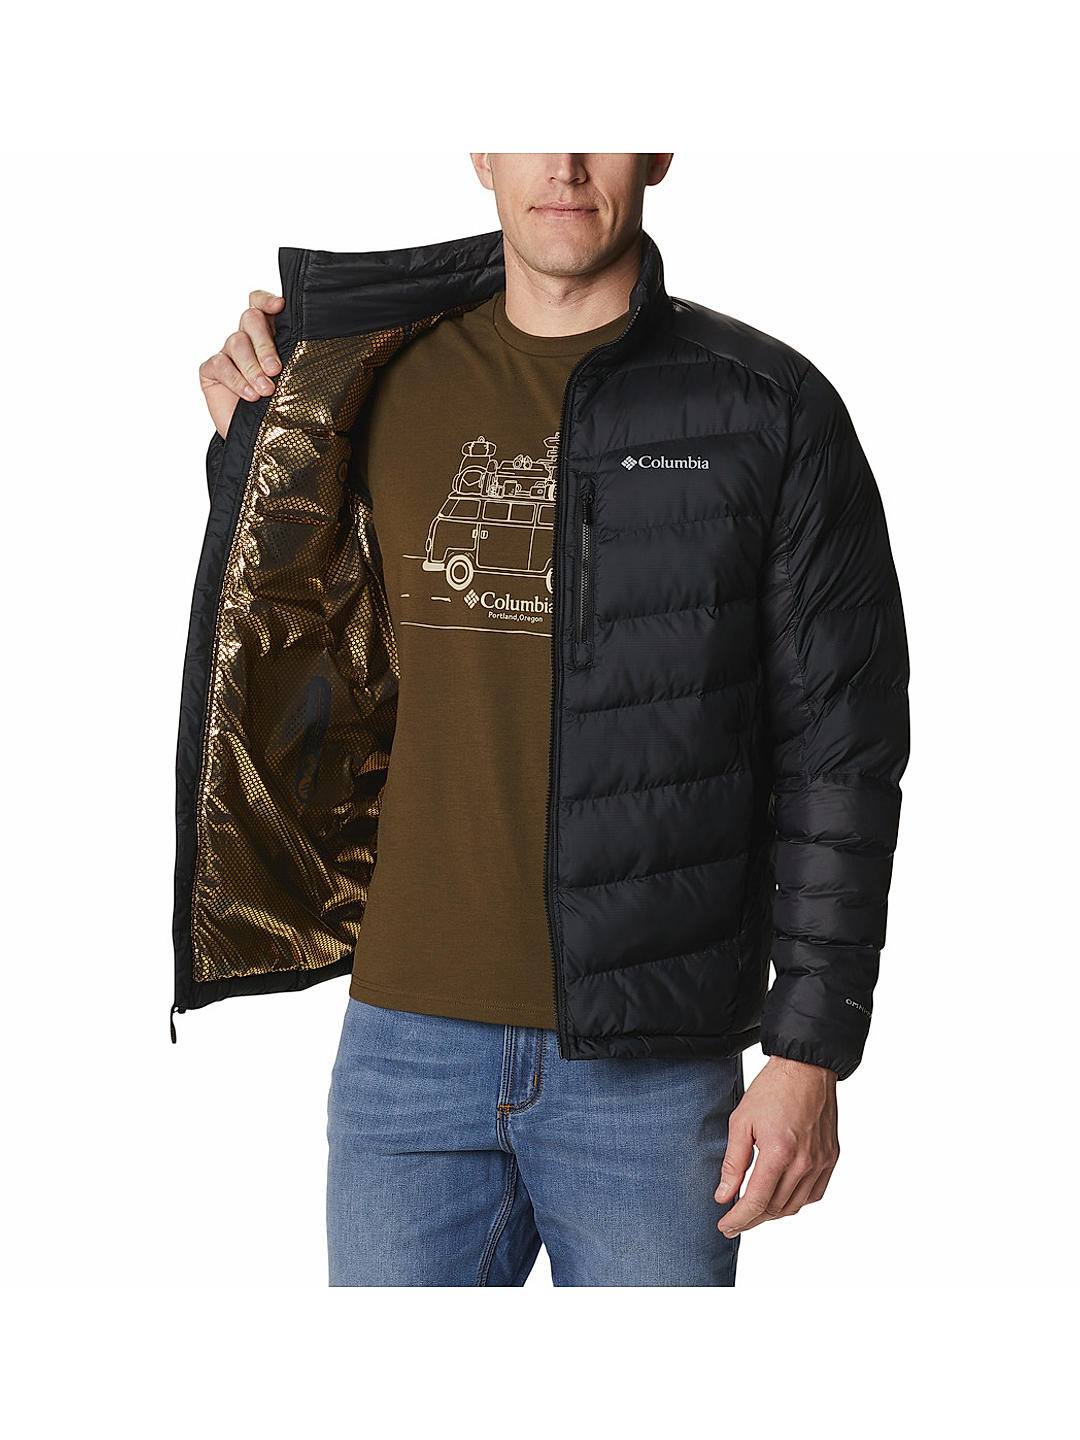 Buy Black Labyrinth Loop Jacket for Men Online at Columbia Sportswear ...